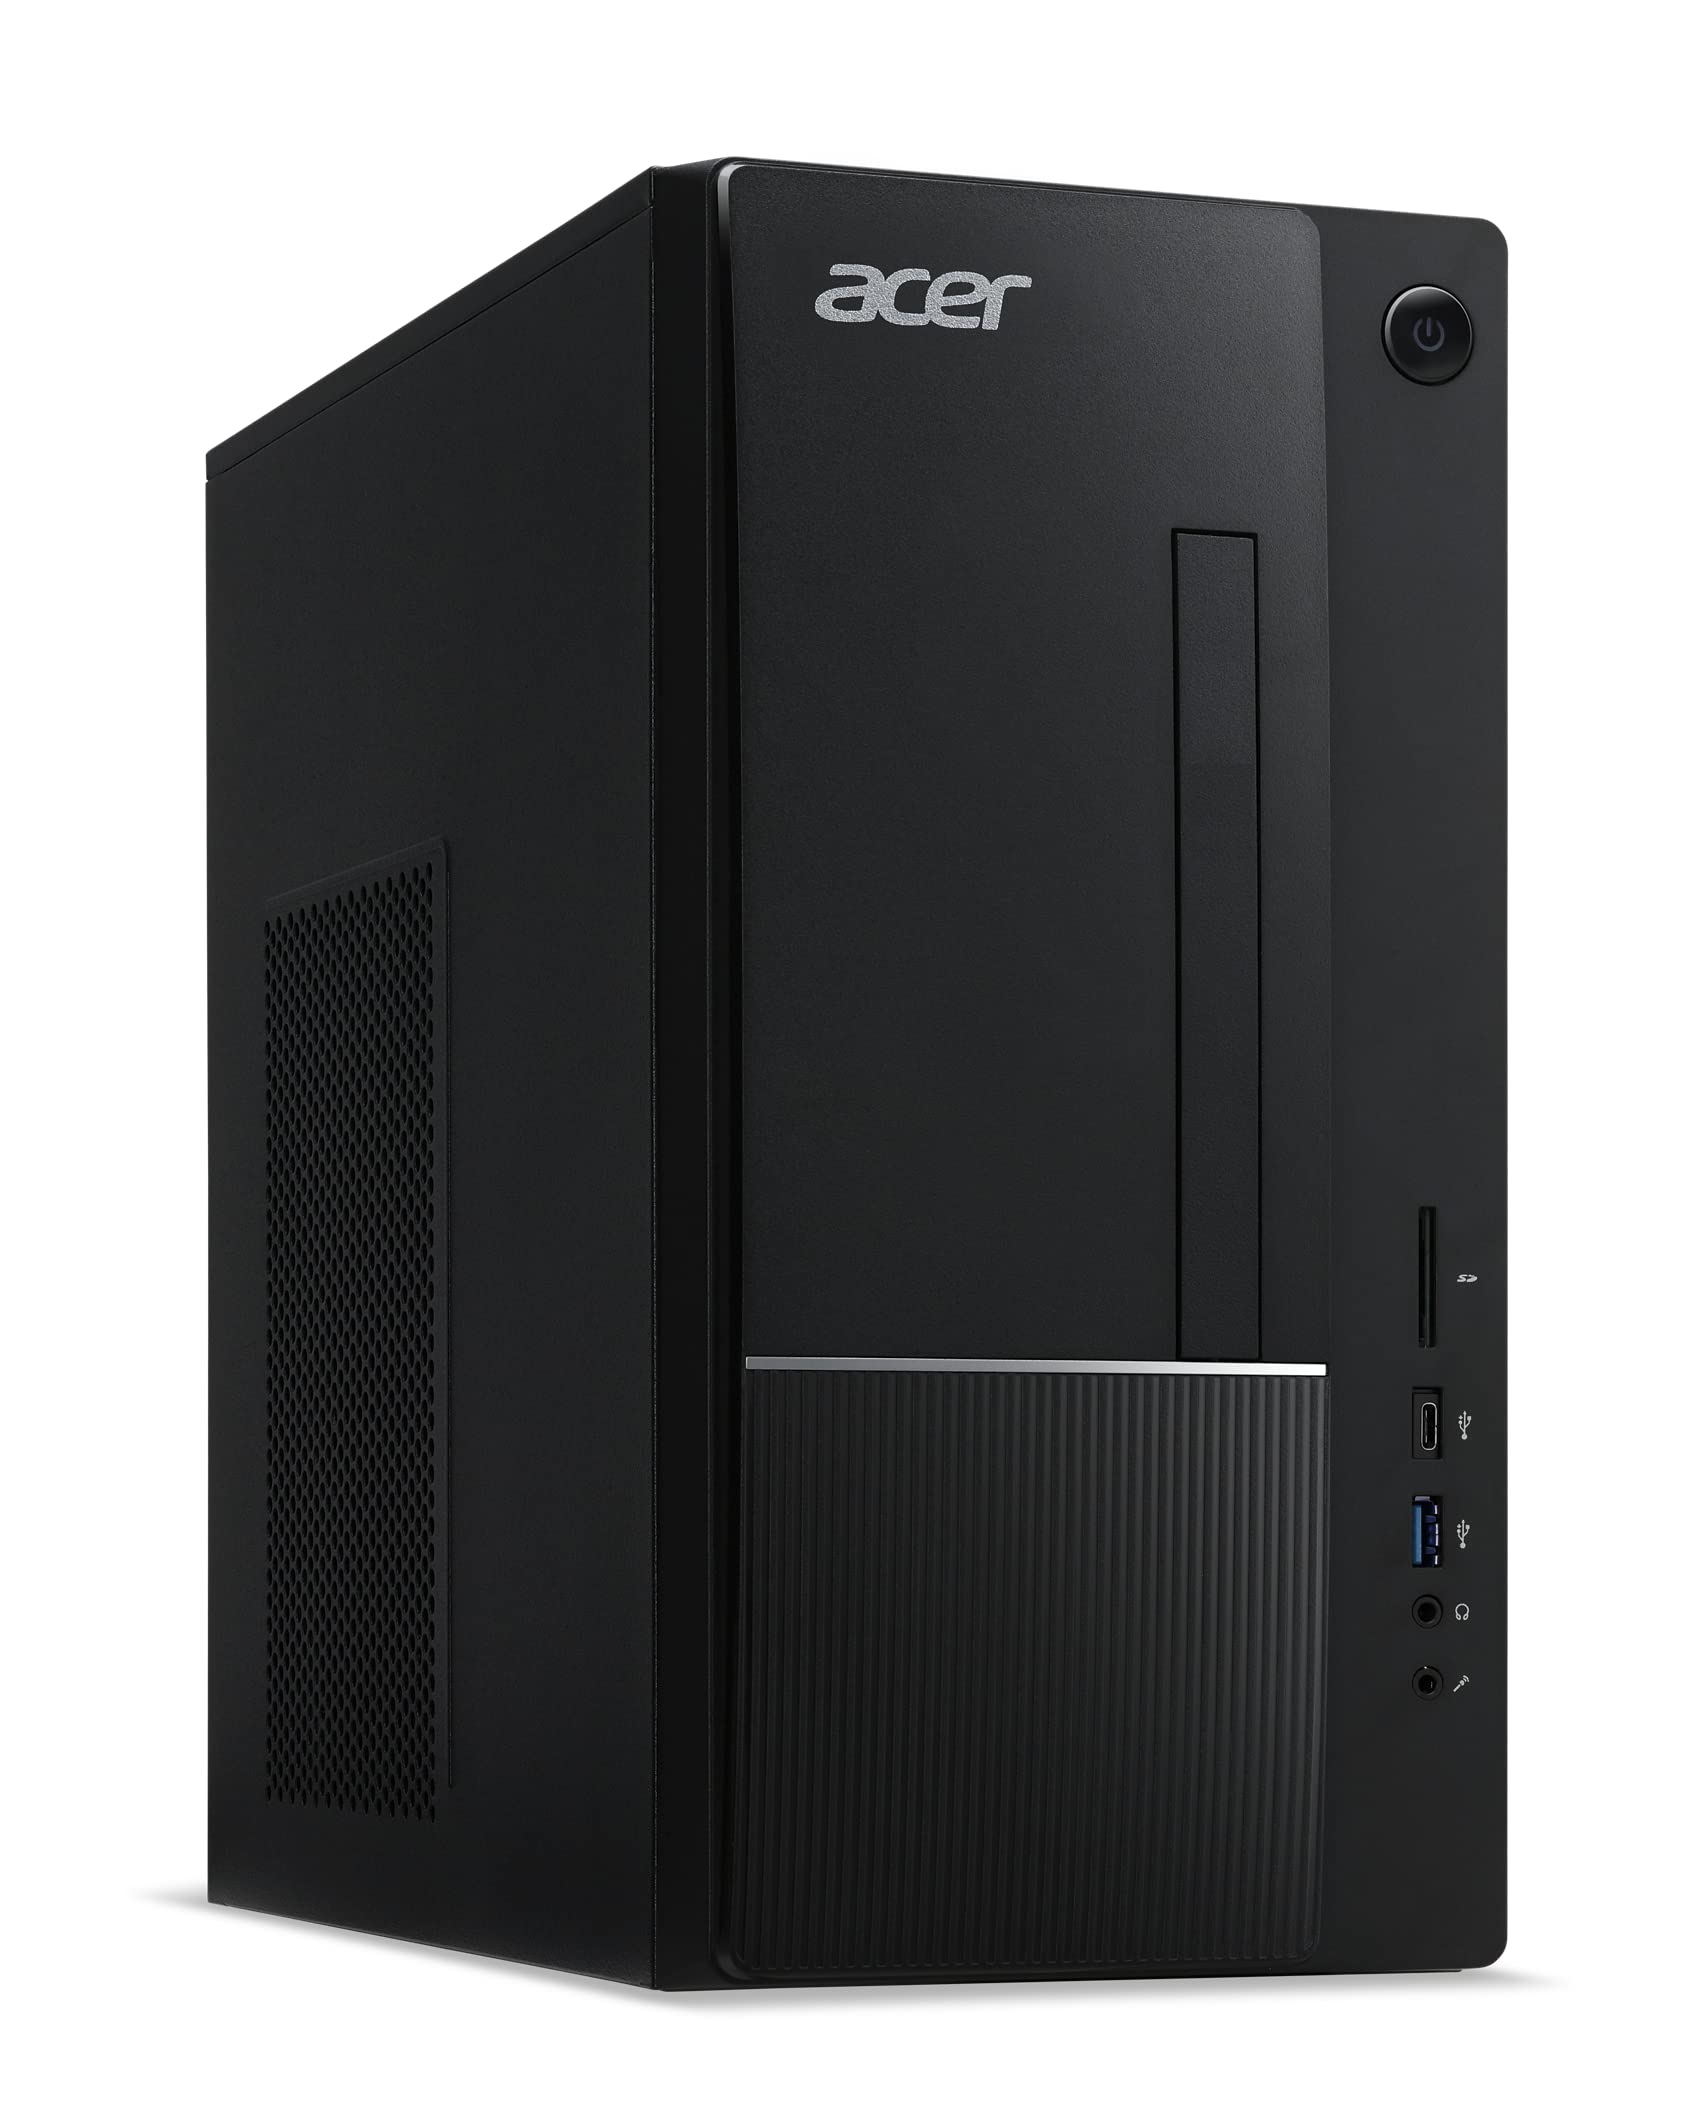 Acer Aspire TC-1770-UR11 Desktop | 13th Gen Intel Core i5-13400 10-Core Processor | 8GB 3200MHz DDR4 | 512GB M.2 2280 PCIe Gen 4 SSD | SD Card Reader | Intel Wi-Fi 6E AX211 | Windows 11 Home,Black